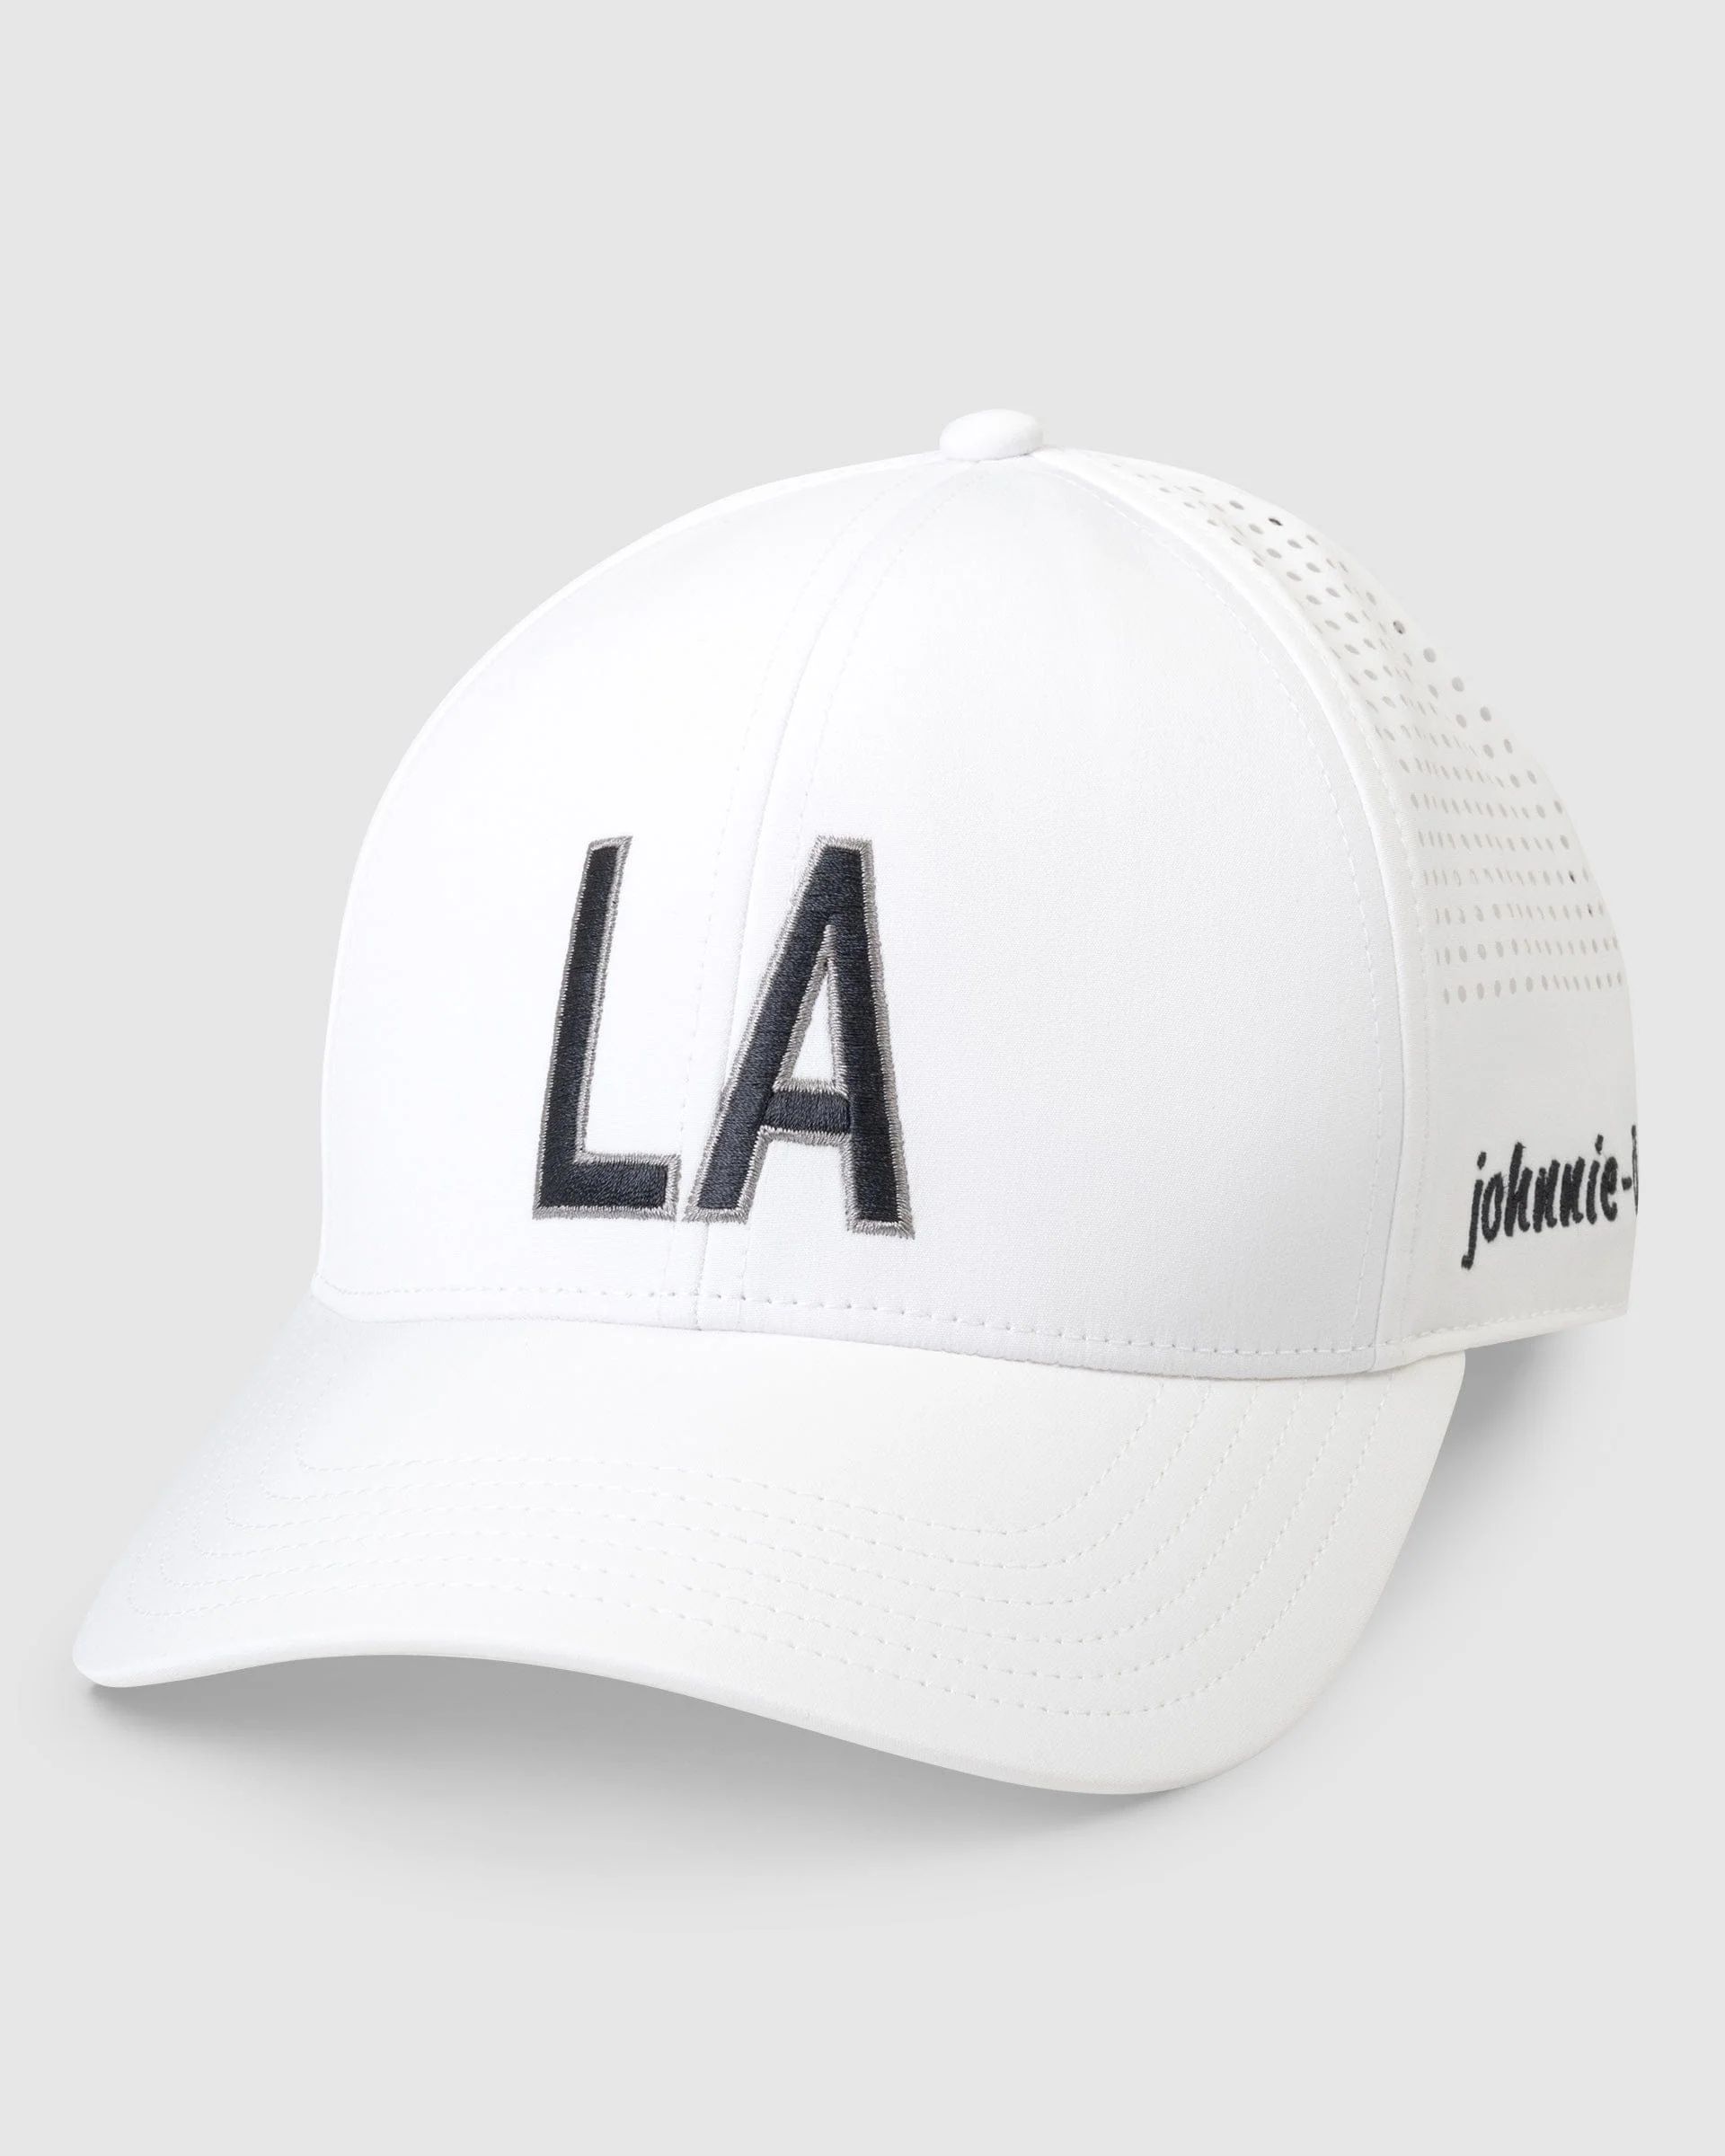 Windstop LA Performance Hat | johnnie O